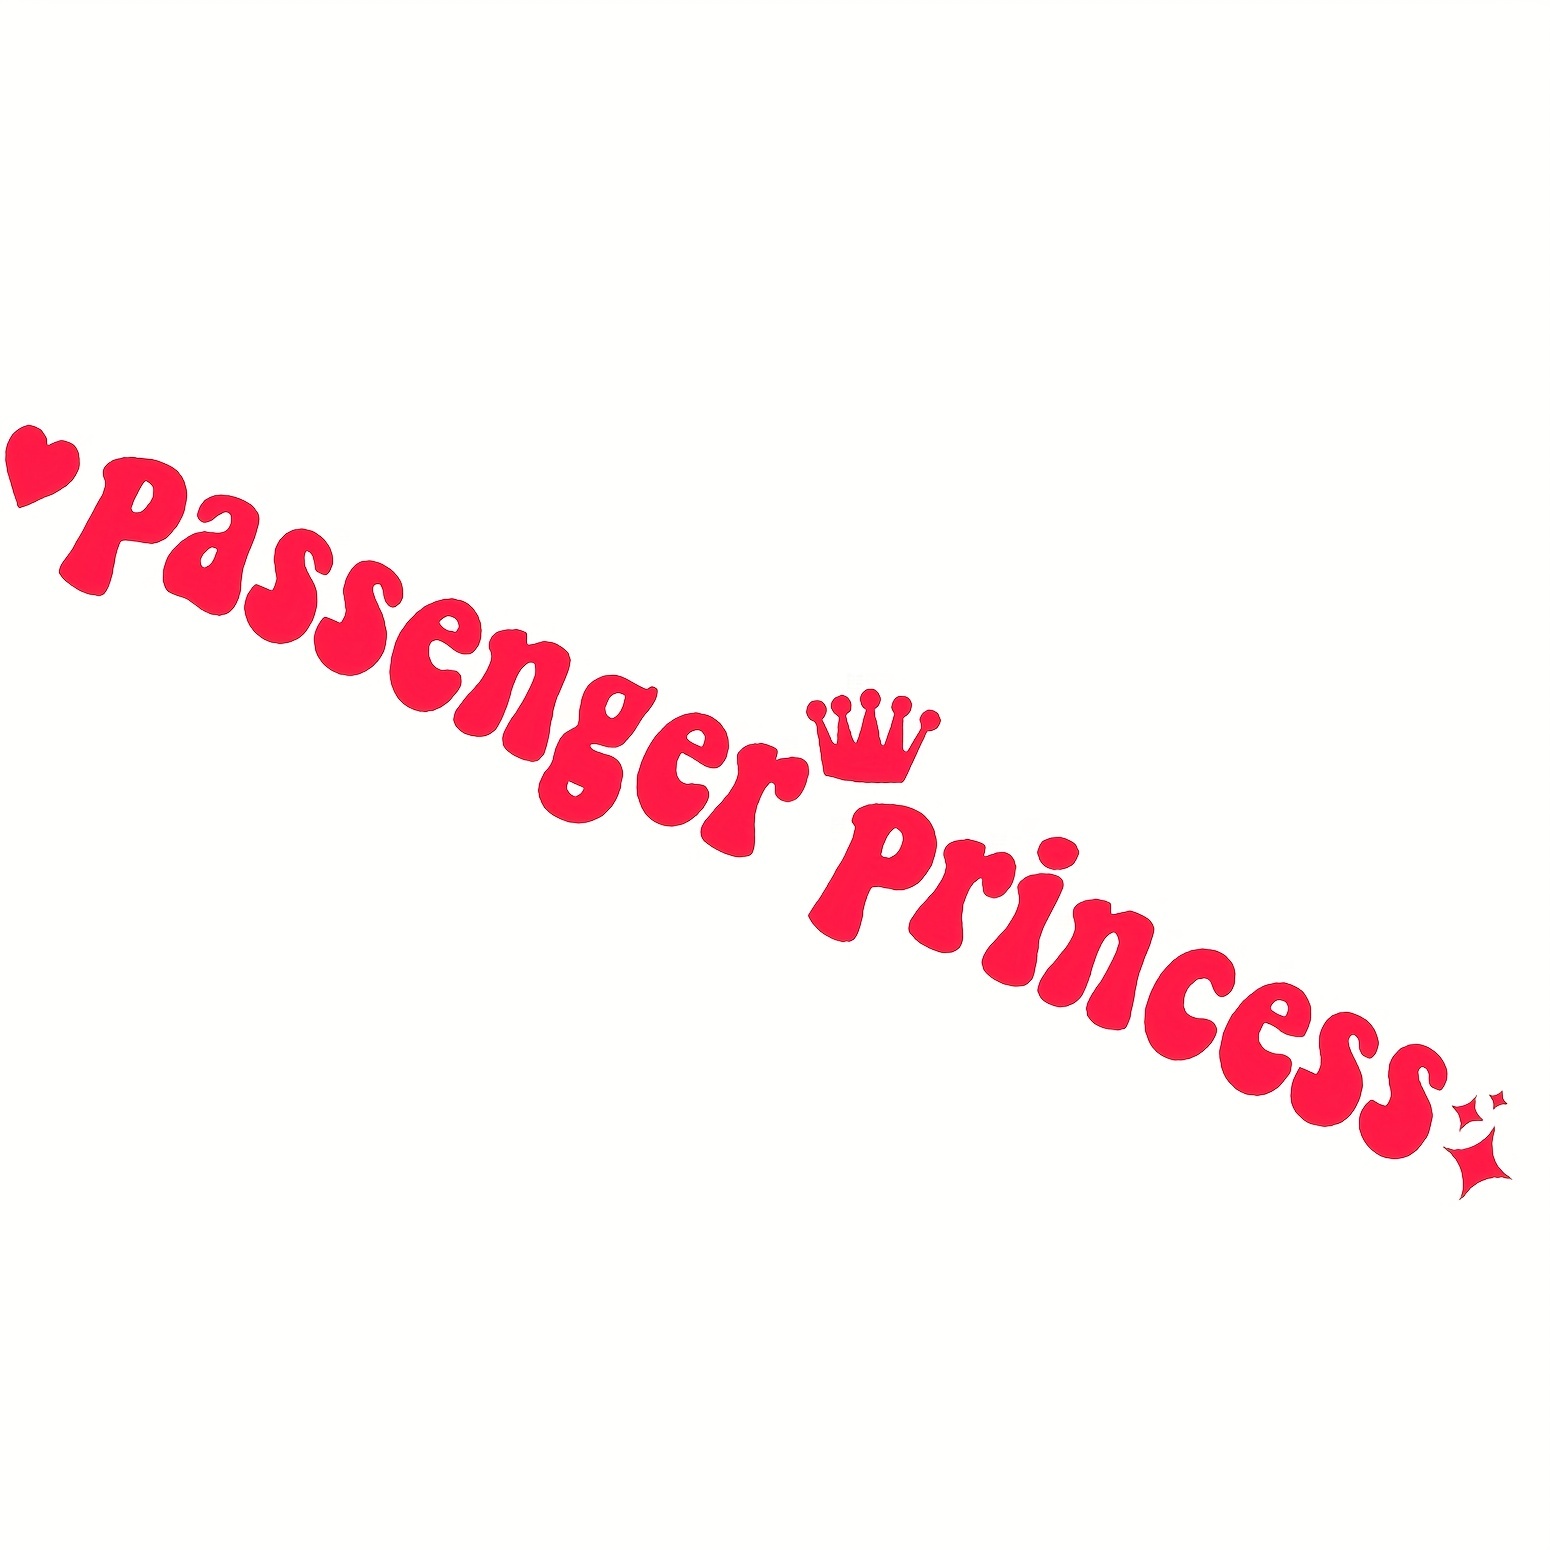 Passenger Princess sticker